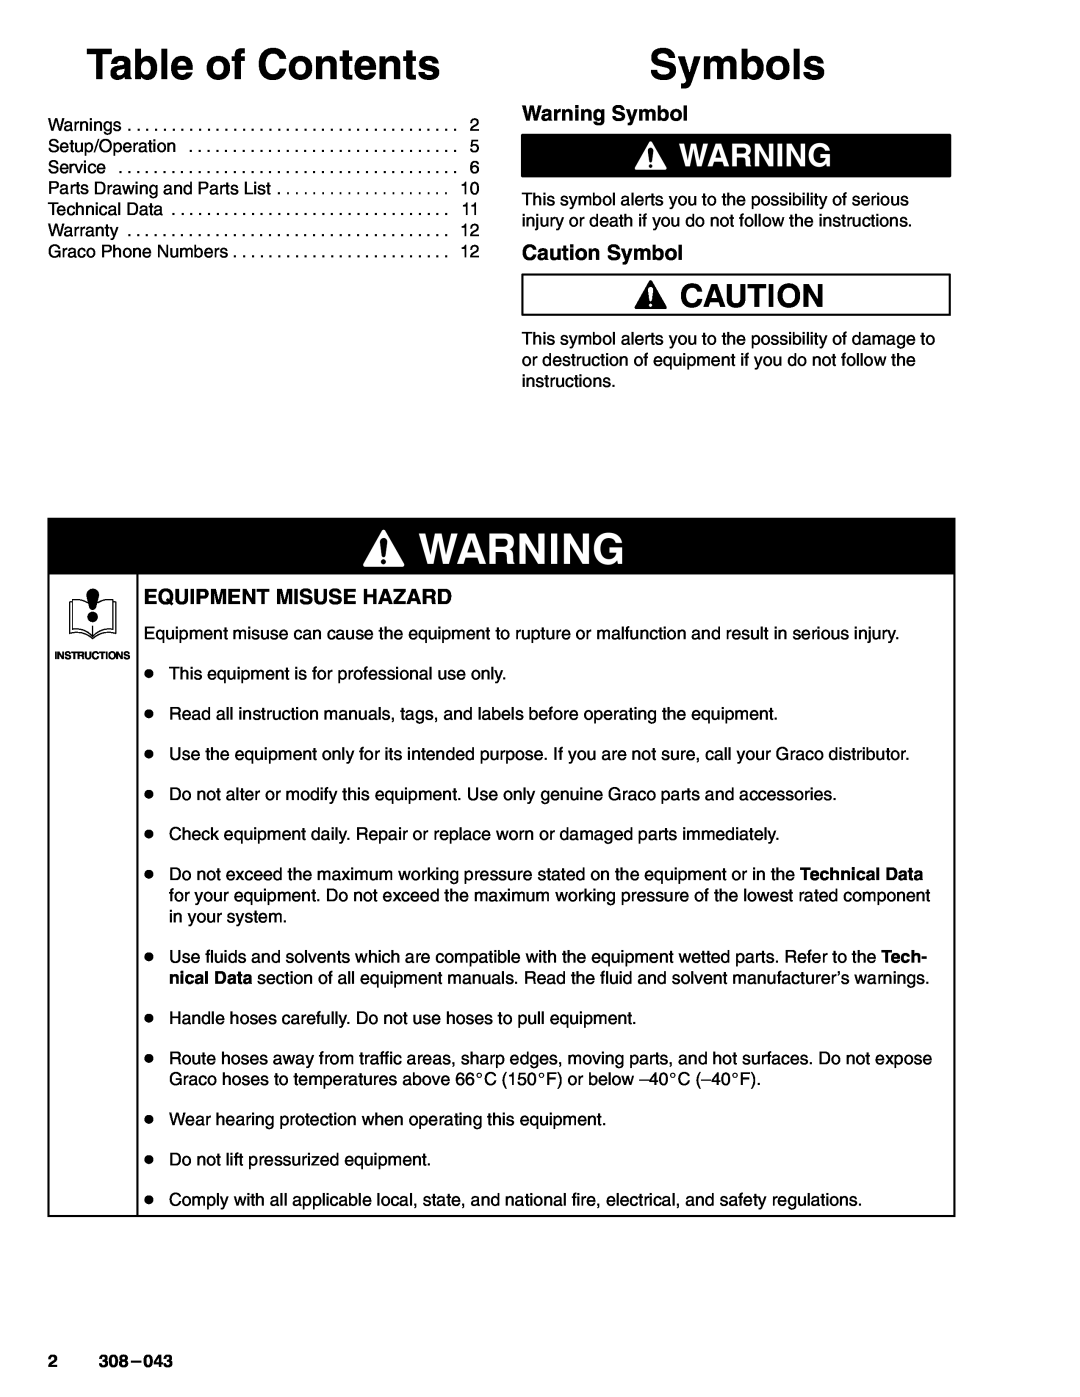 Hitachi SERIES F, 210-208 manual Table of Contents, Symbols, Warning Symbol, Caution Symbol, Equipment Misuse Hazard 